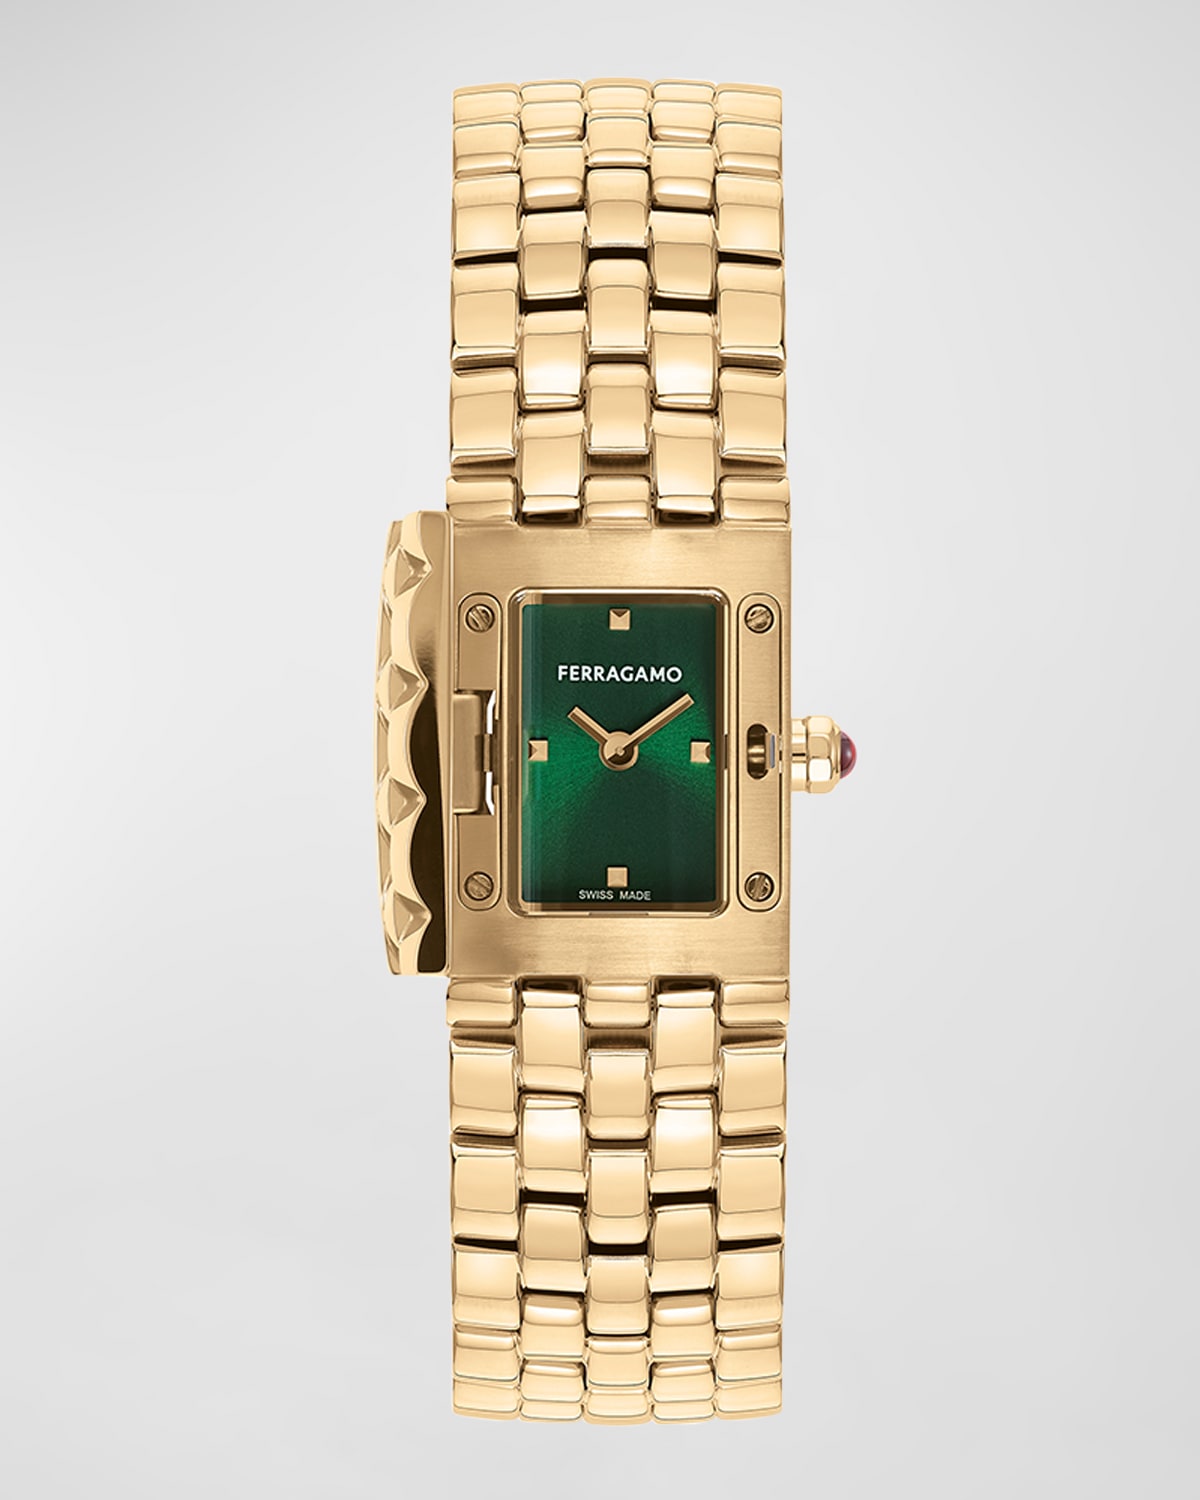 18.5x30mm Ferragamo Secret Watch with Green Dial, Yellow Gold